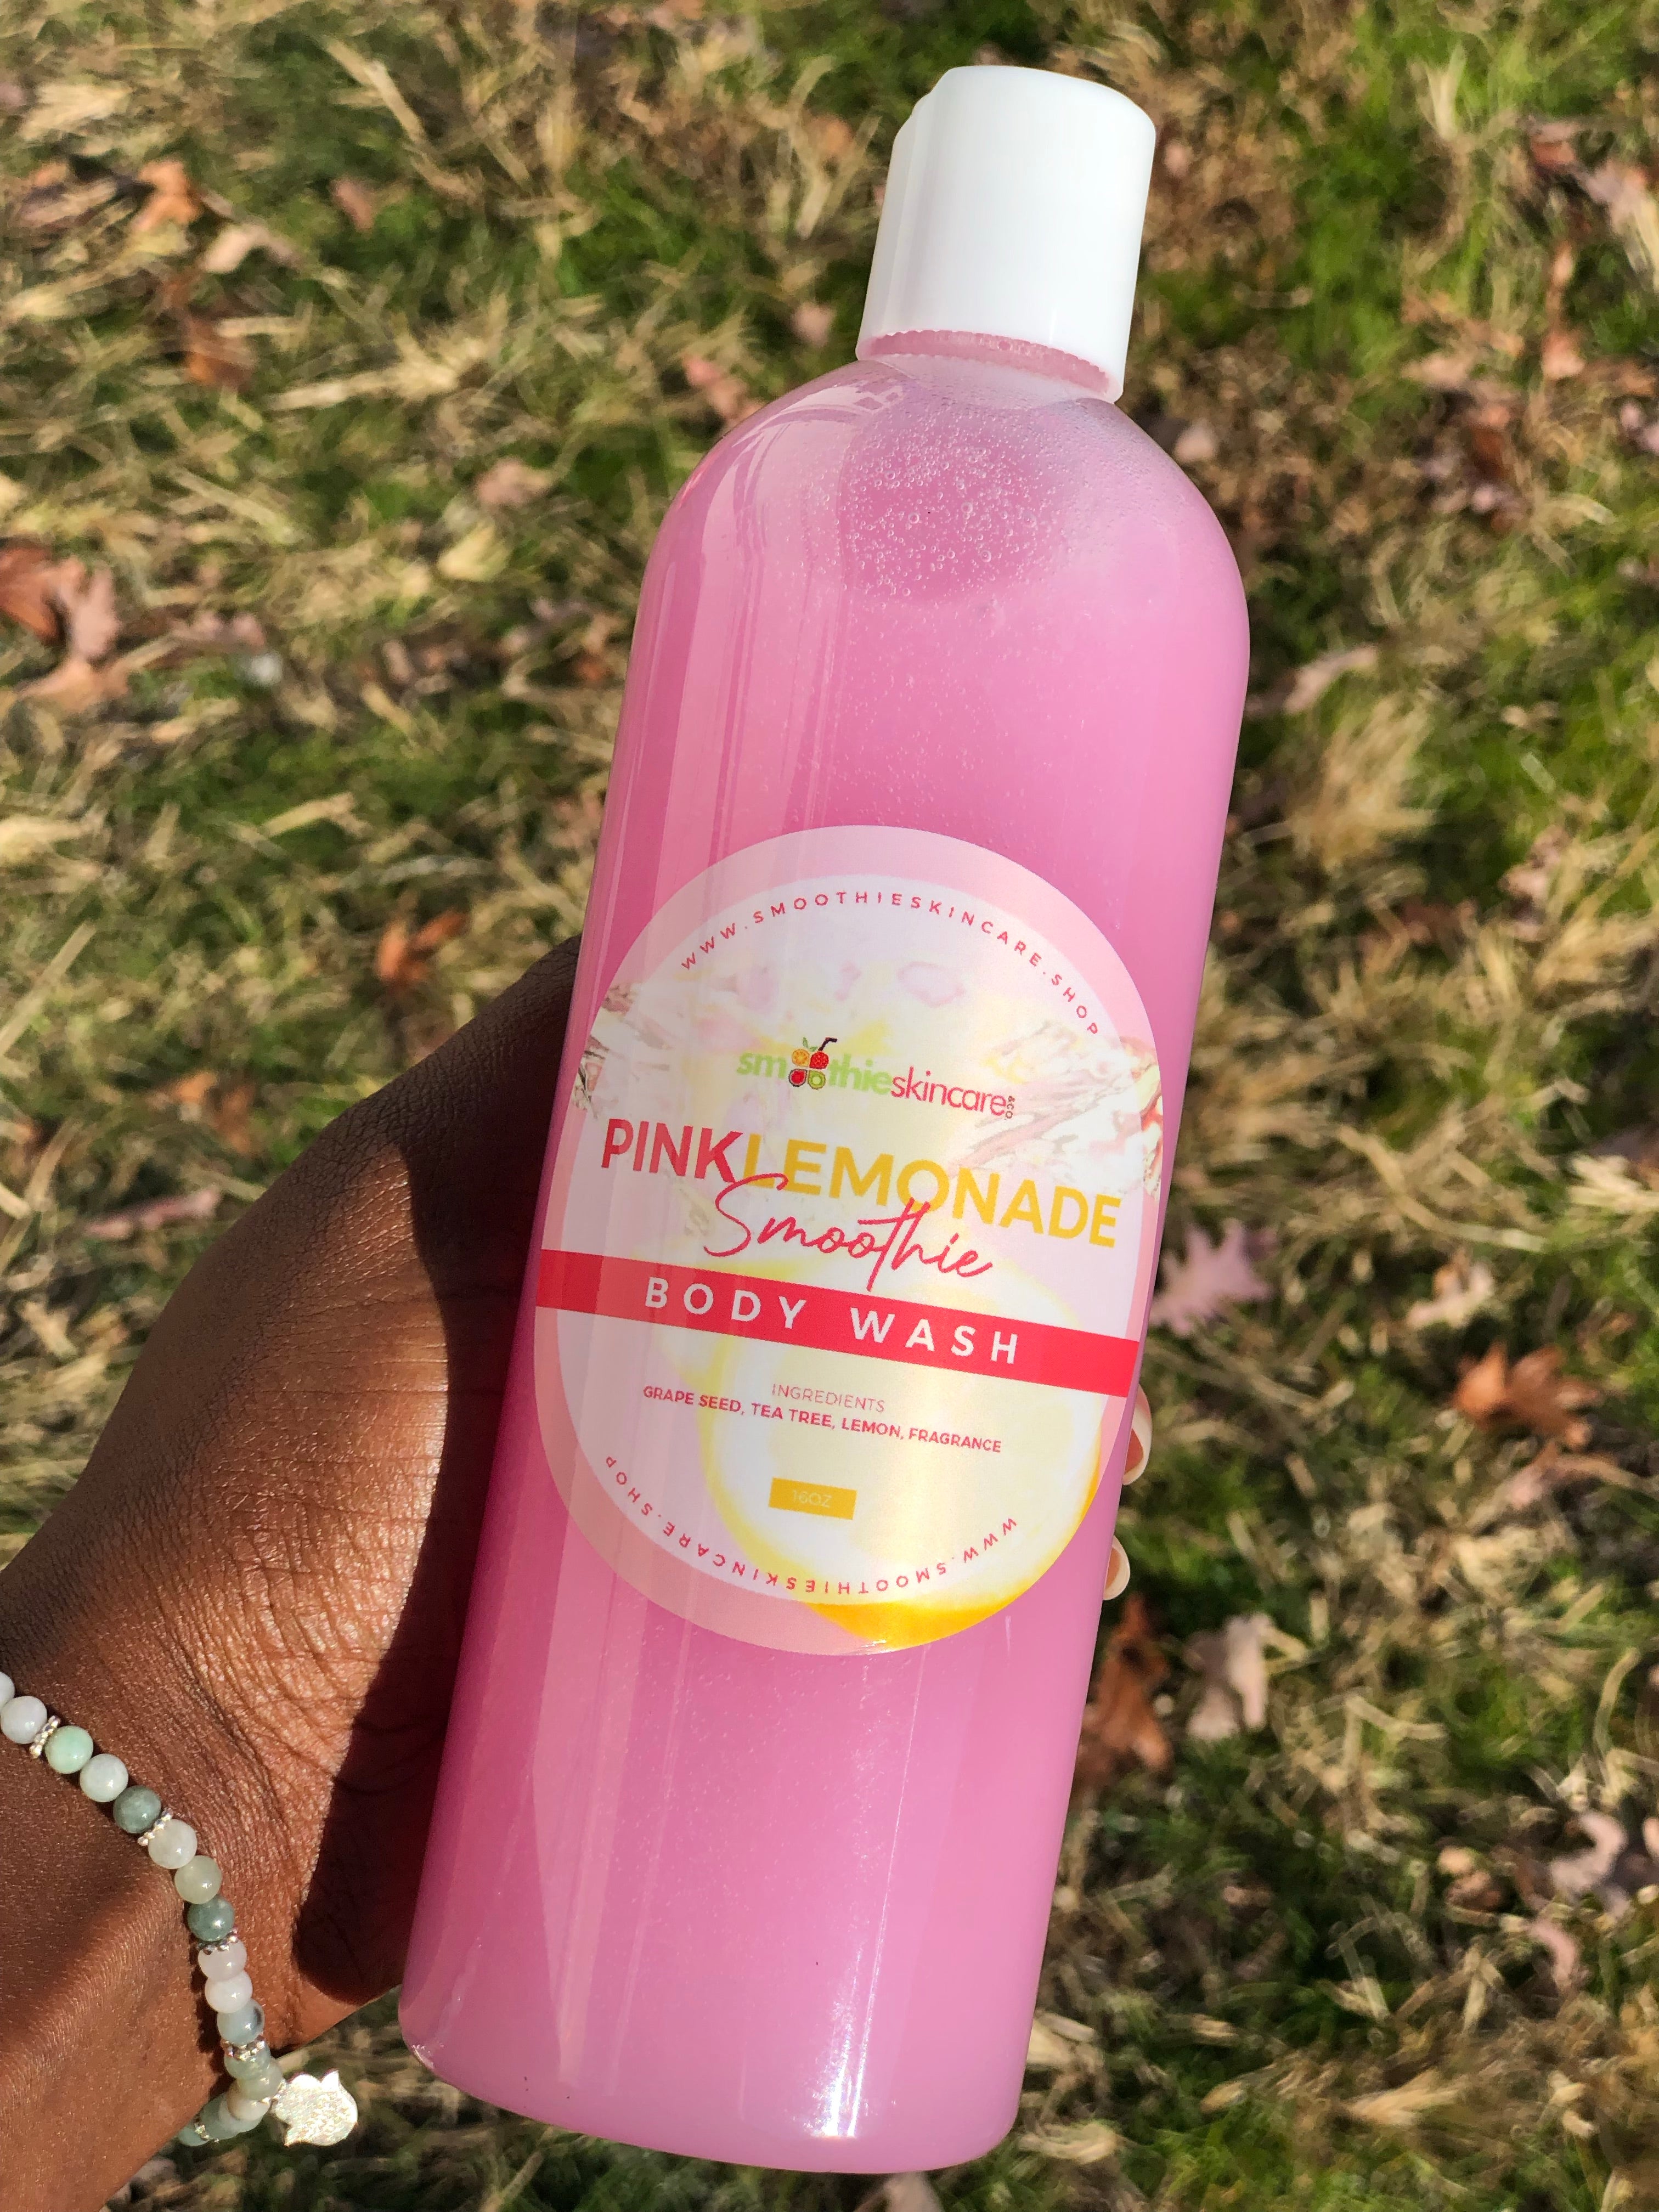 Pink Lemonade Smoothie Body Wash